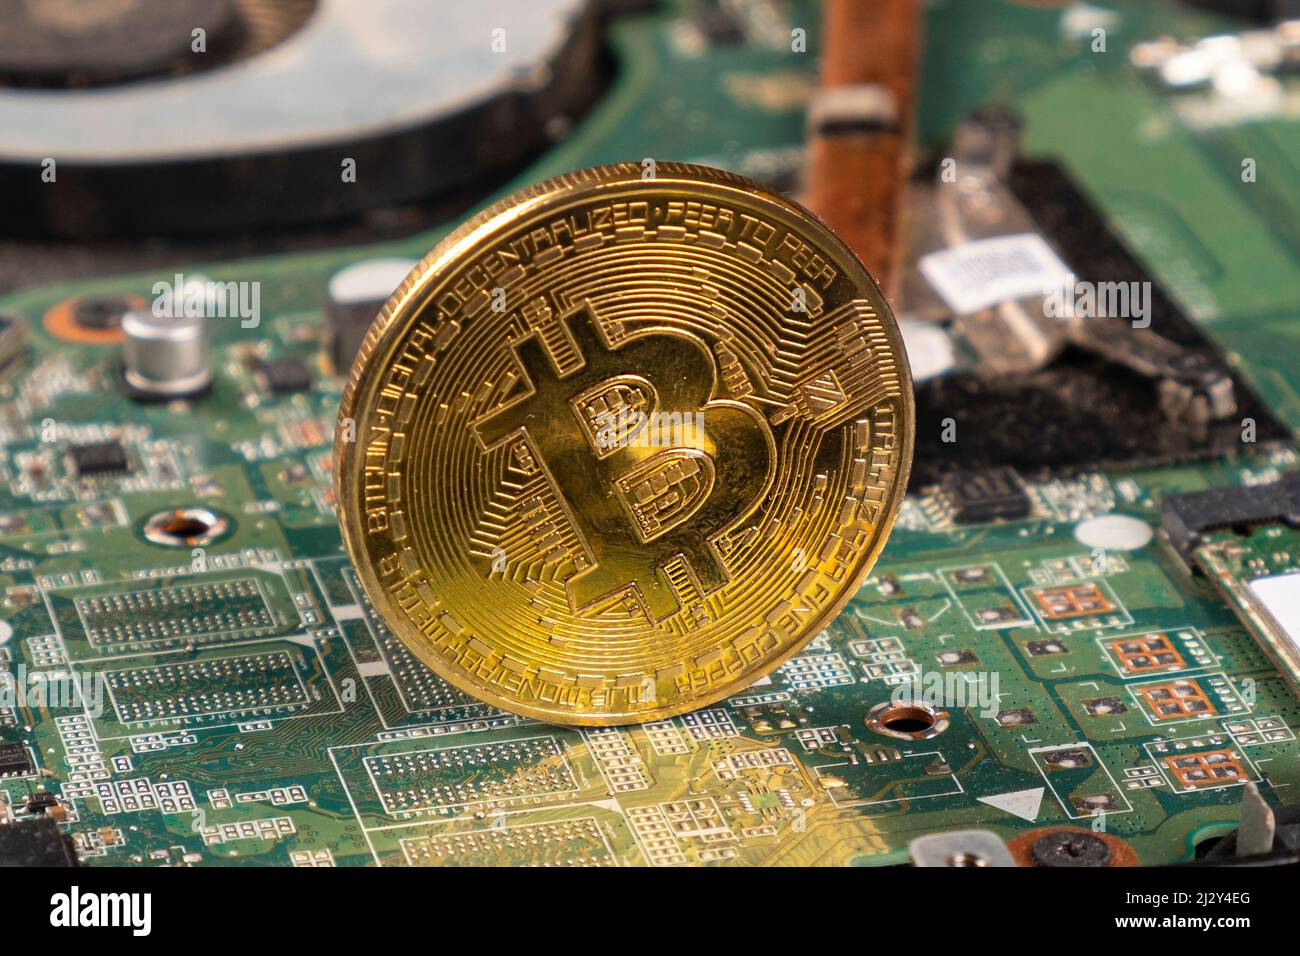 btc bitcoin gold coin on motherboard closeup. Stock Photo